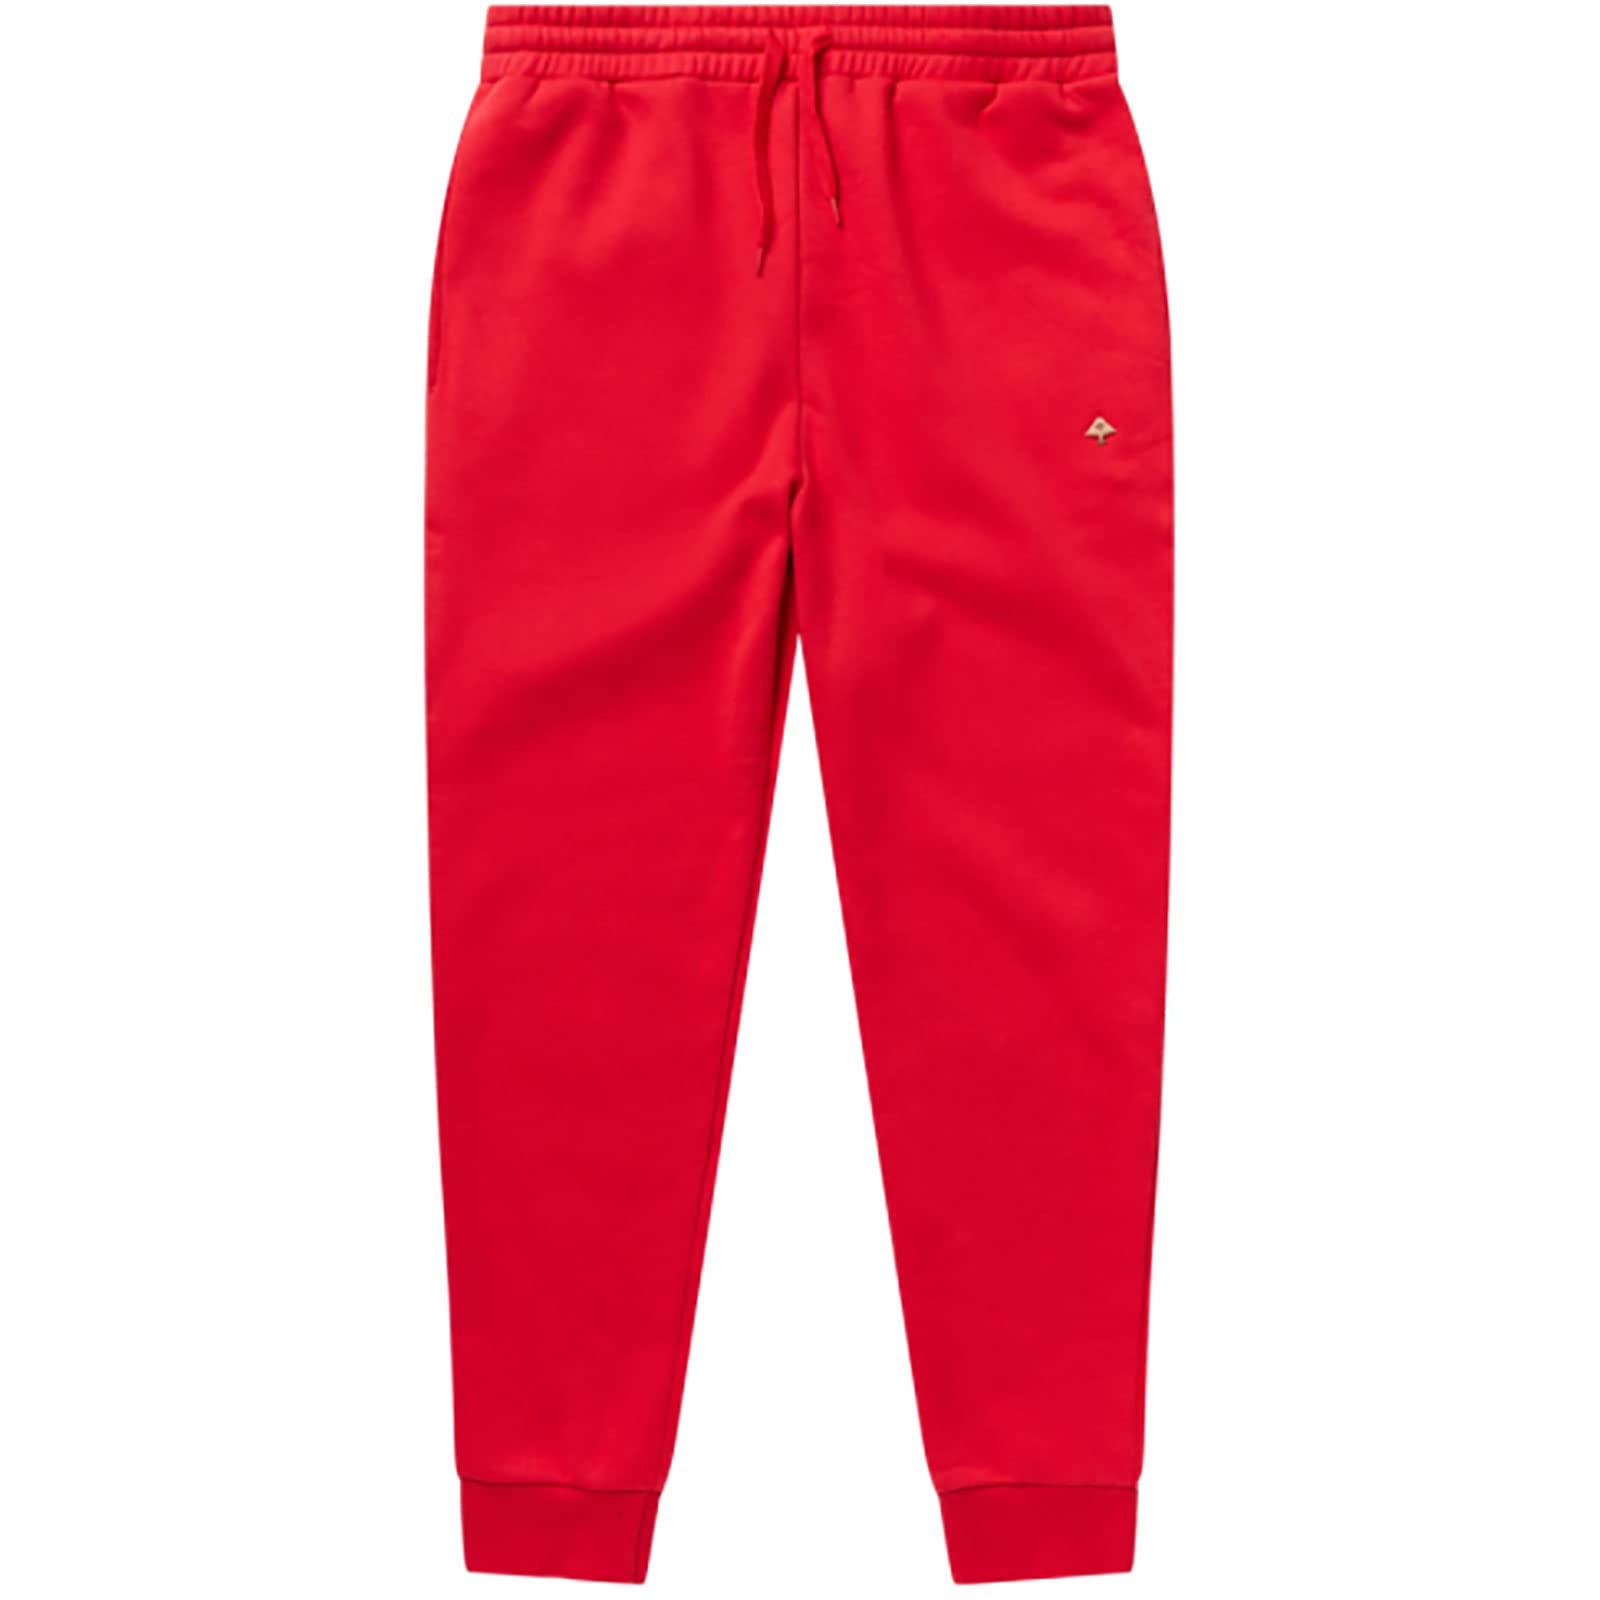 Solid Elastic Waist Slant Pocket Joggers  Pocket sweatpants, Red sweatpants,  Red leggings outfit